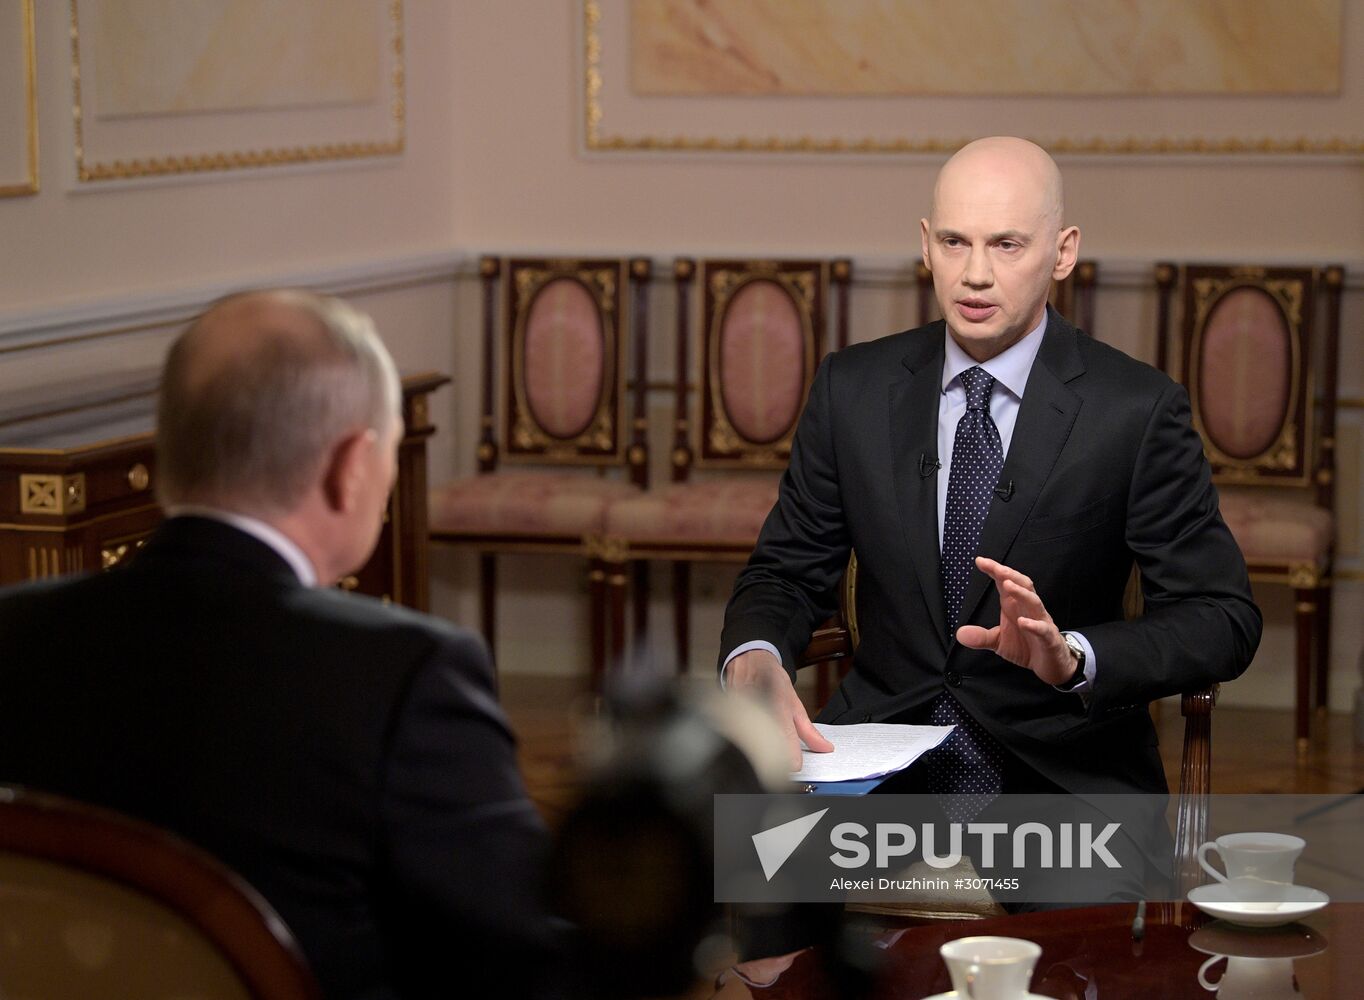 President Vladimir Putin interviewed by Mir Television and Radio Broadcasting Company